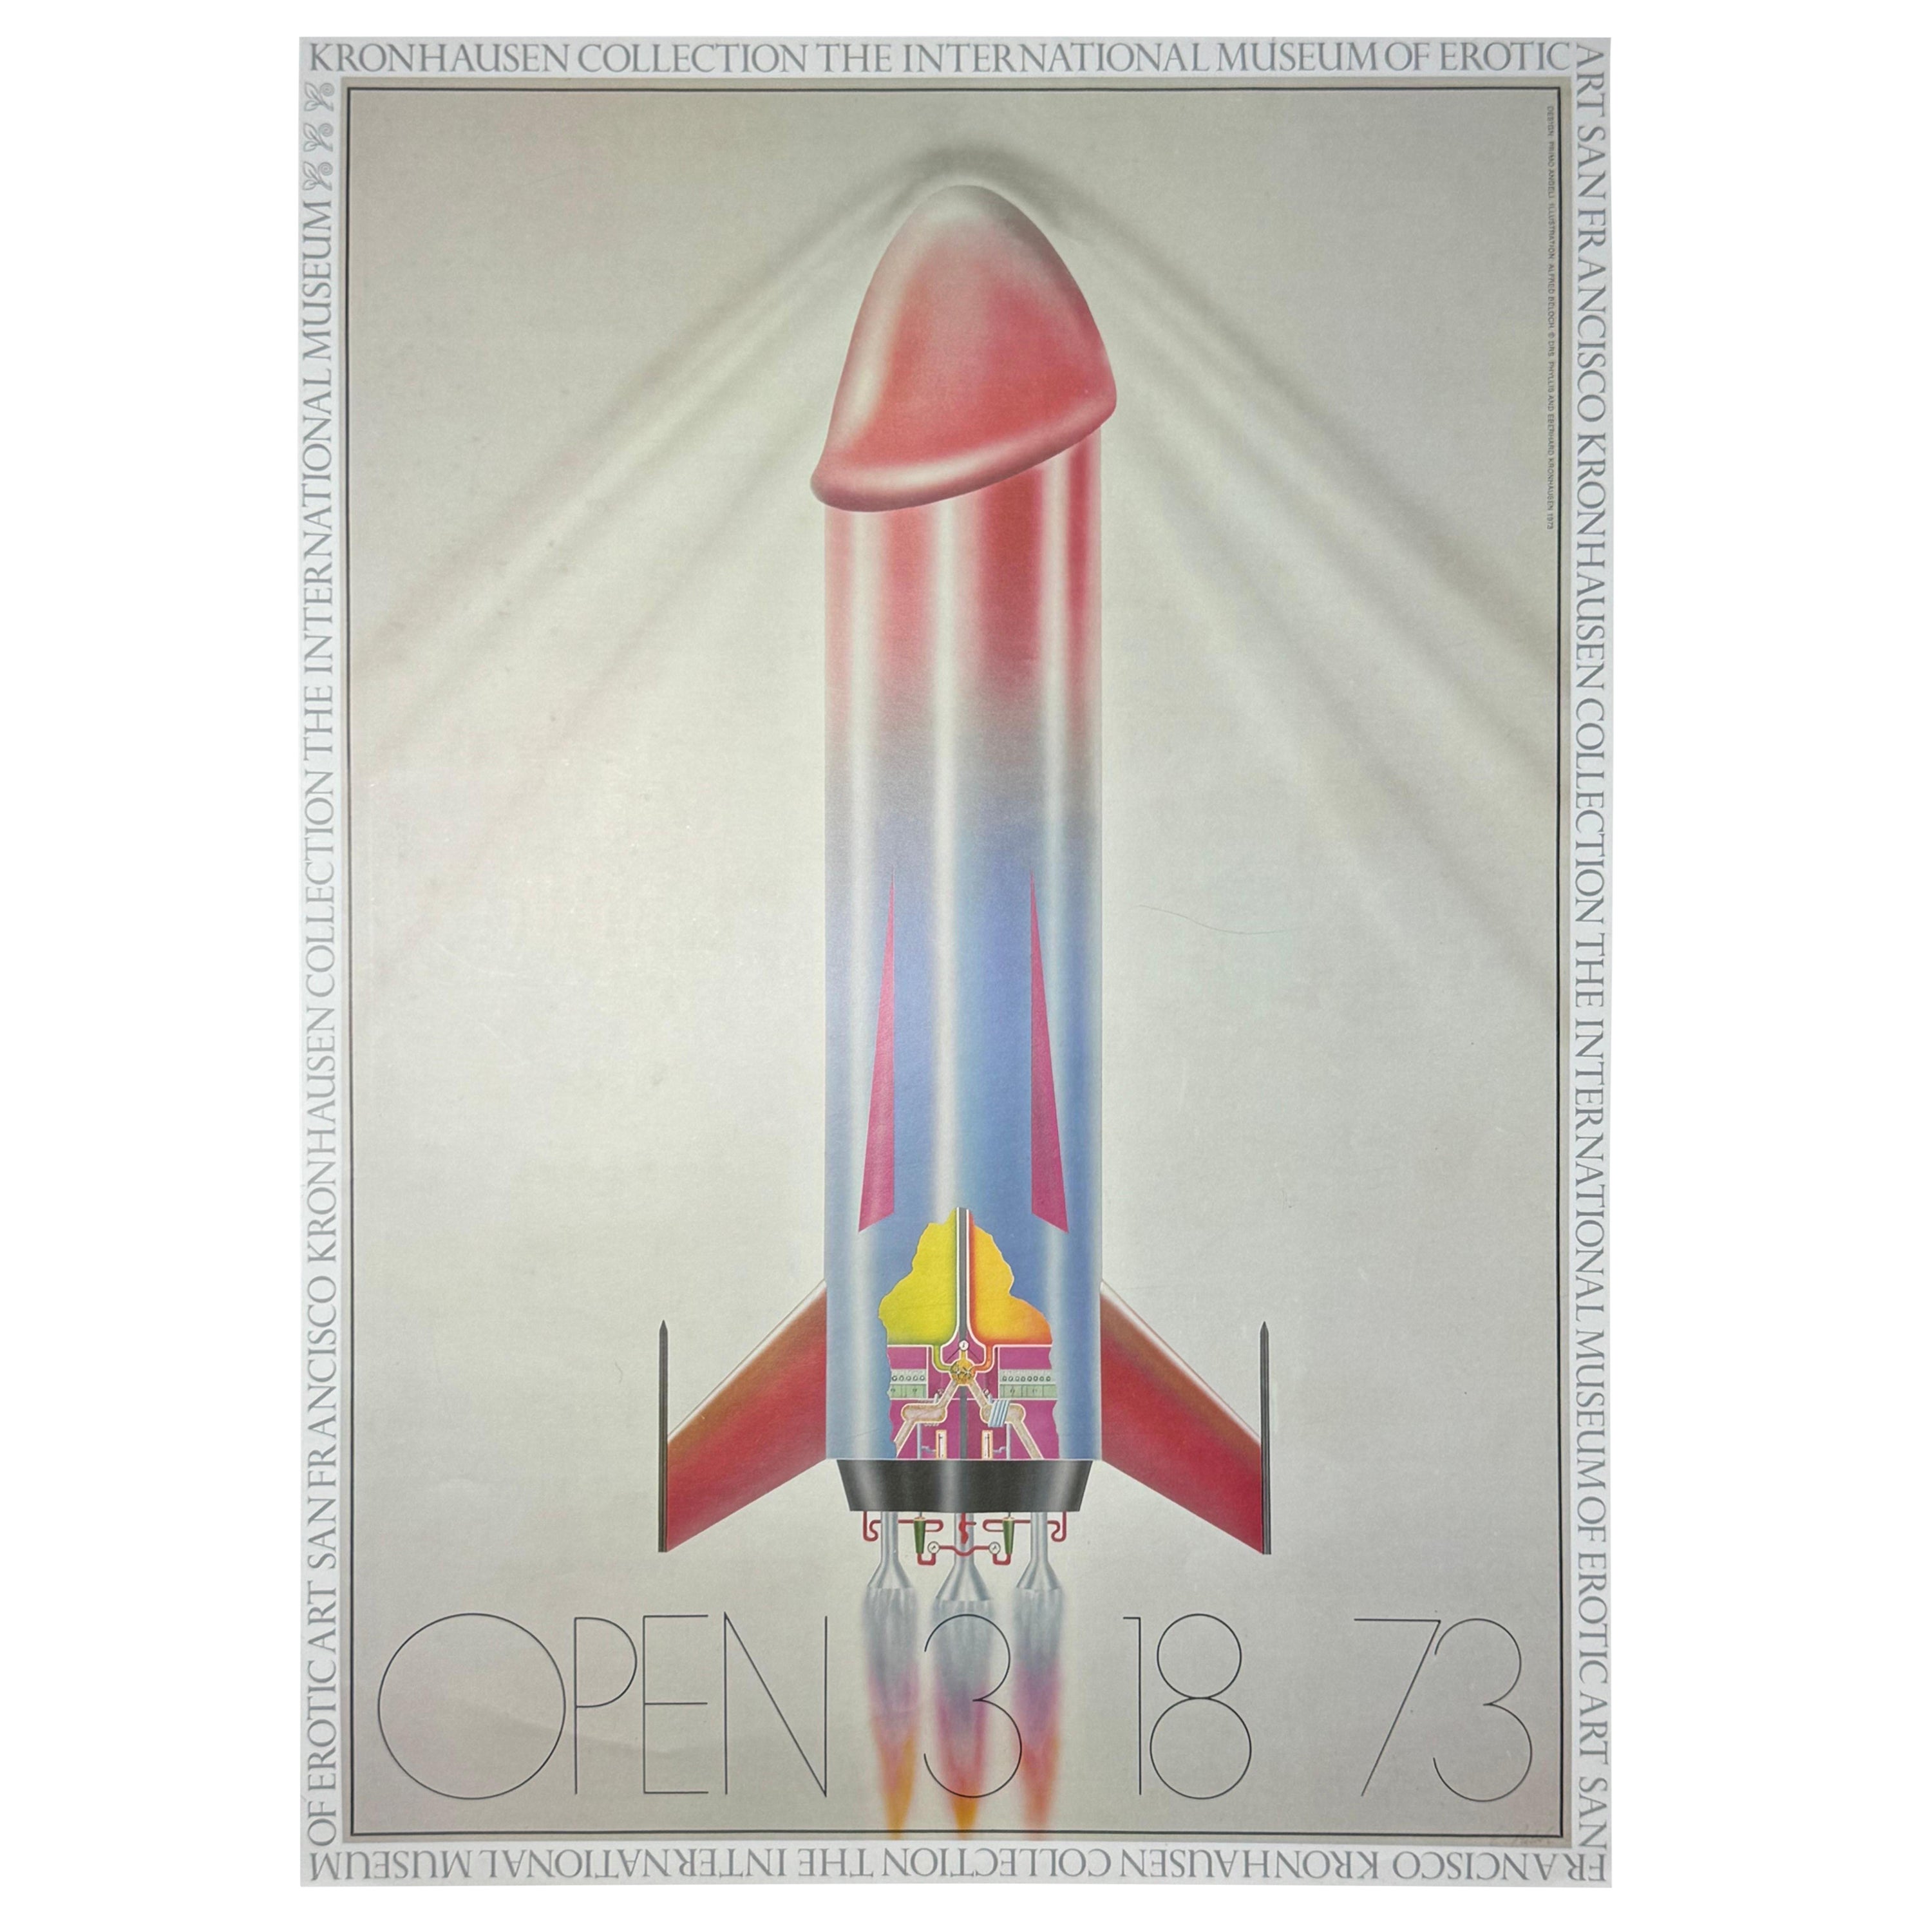 1973 International Museum Of Erotic Art Exhibition Print  For Sale